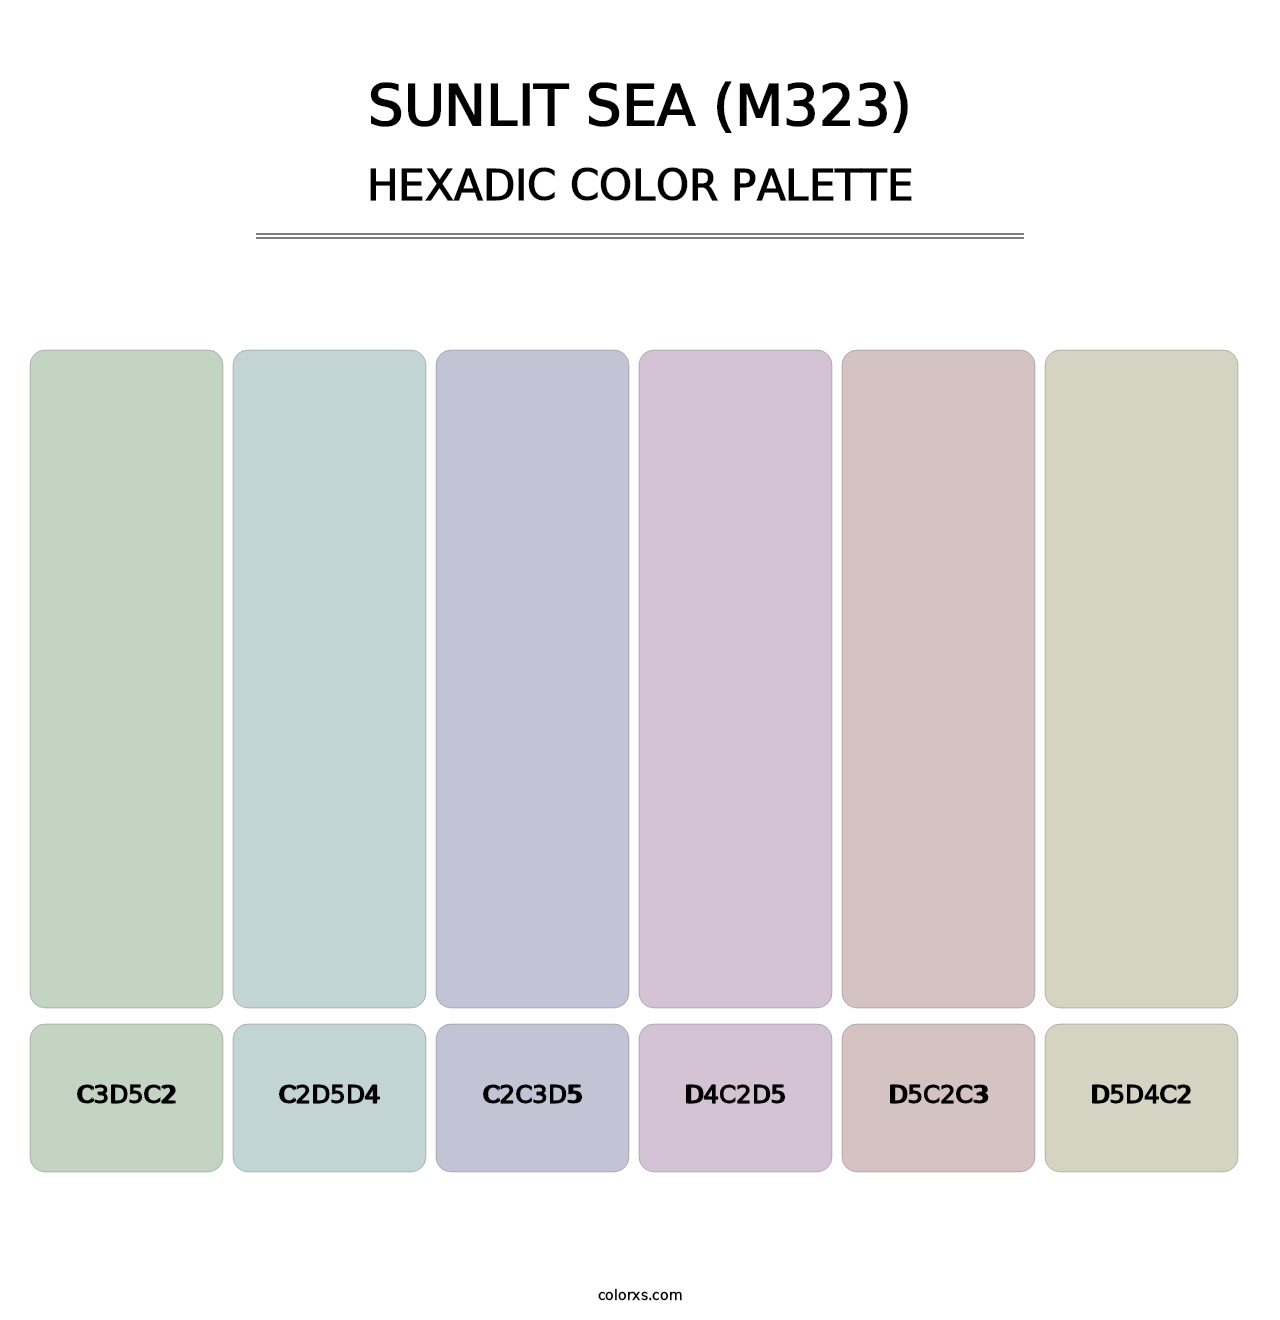 Sunlit Sea (M323) - Hexadic Color Palette